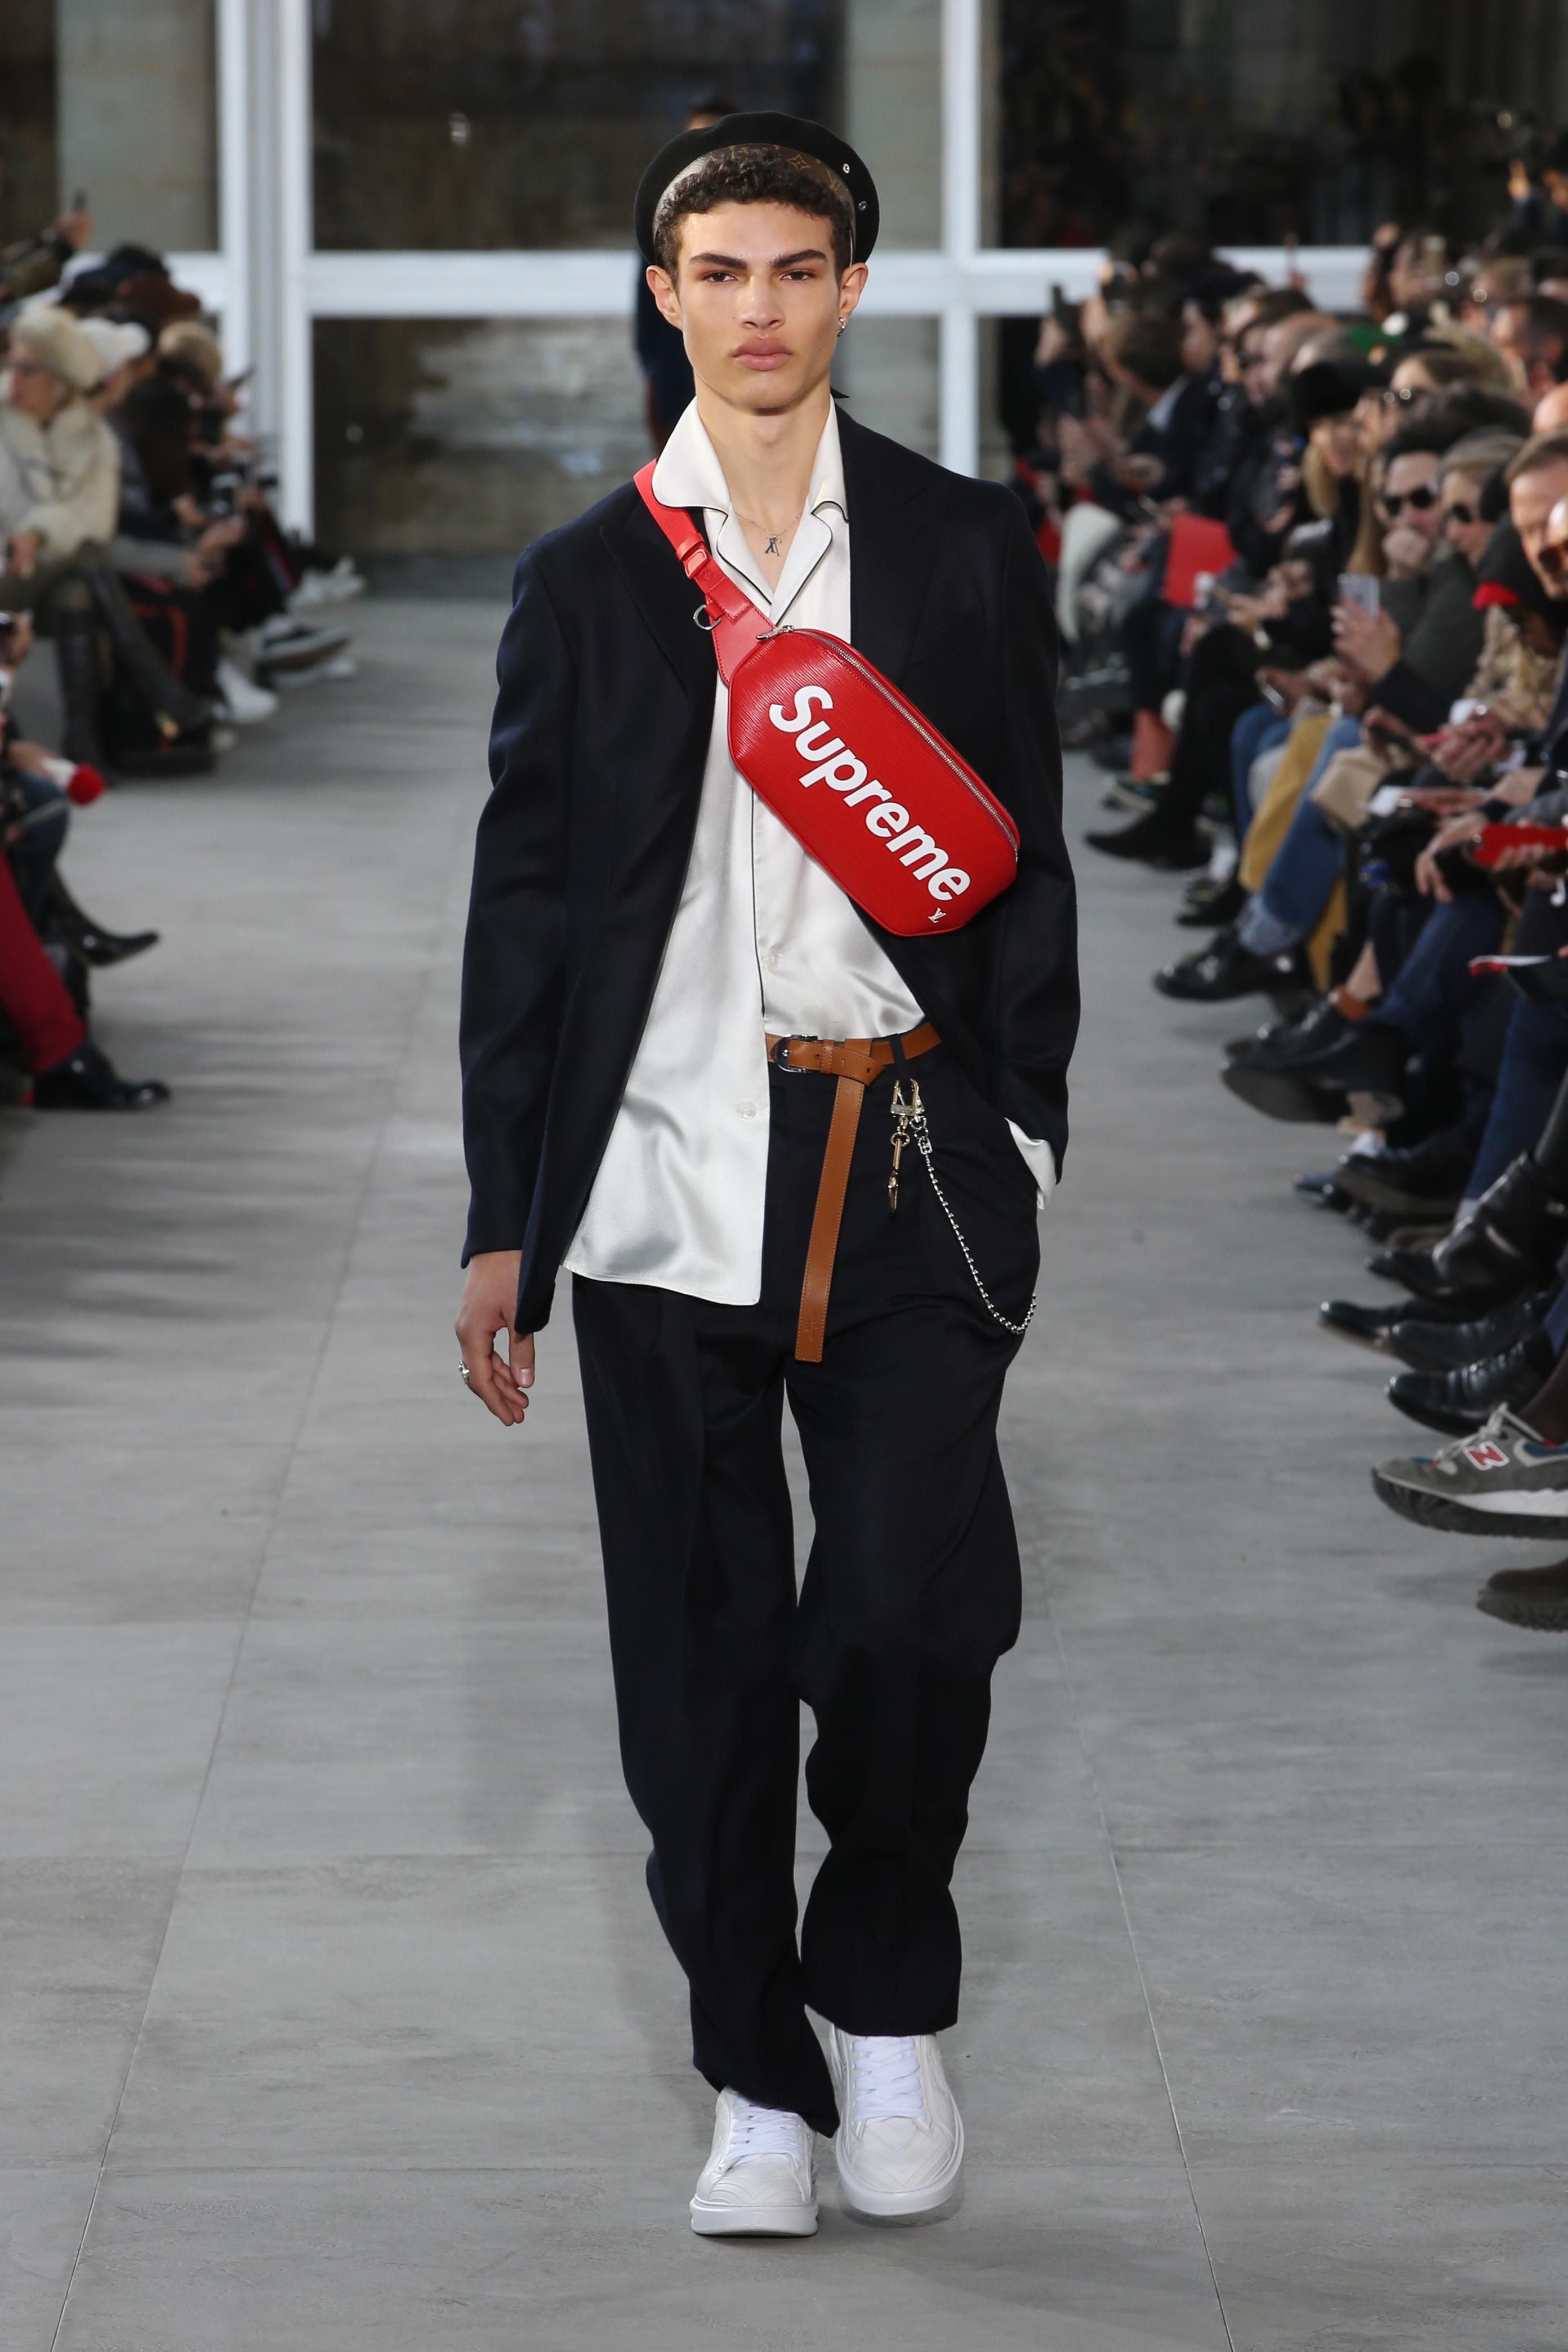 Do we really need a new Supreme x Louis Vuitton collabo?